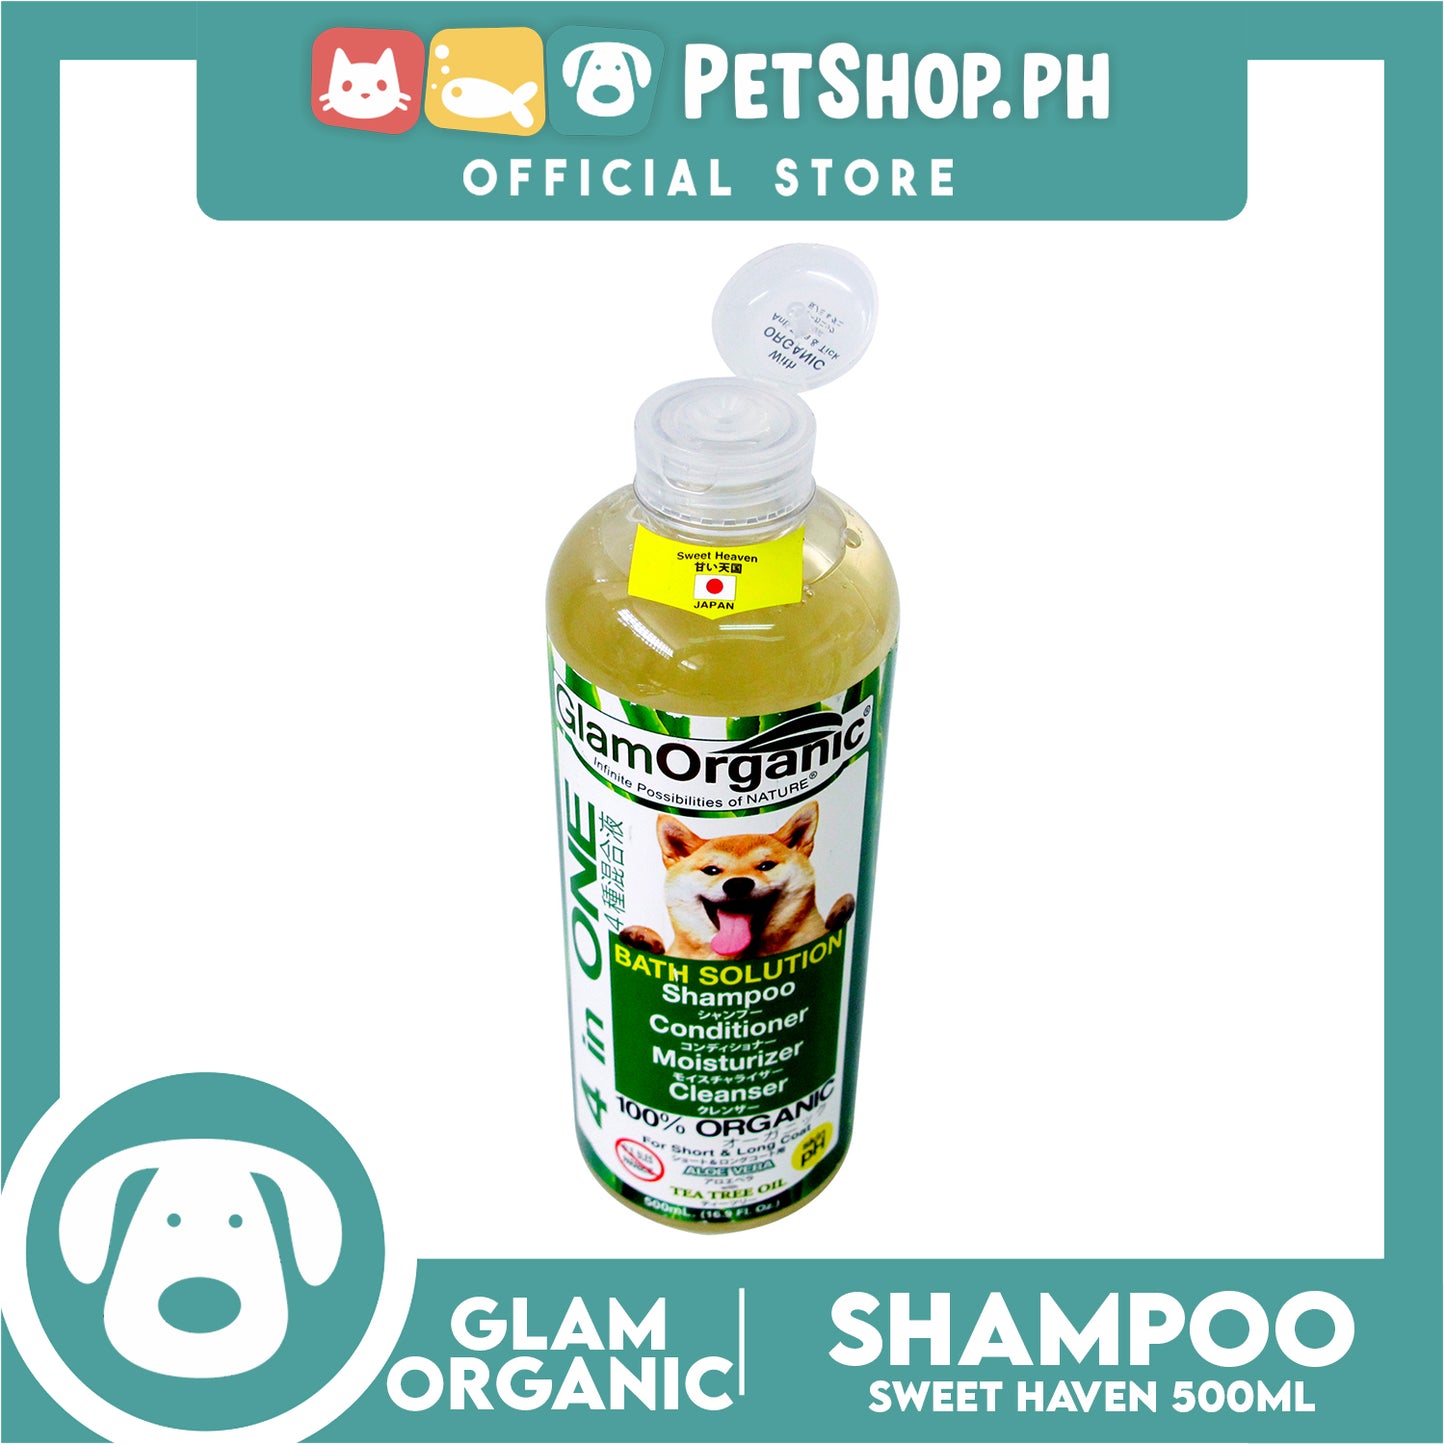 Glam Organic 4 in 1 Bath Solution 100% Organic 500ml (Sweet Heaven) Dog Grooming